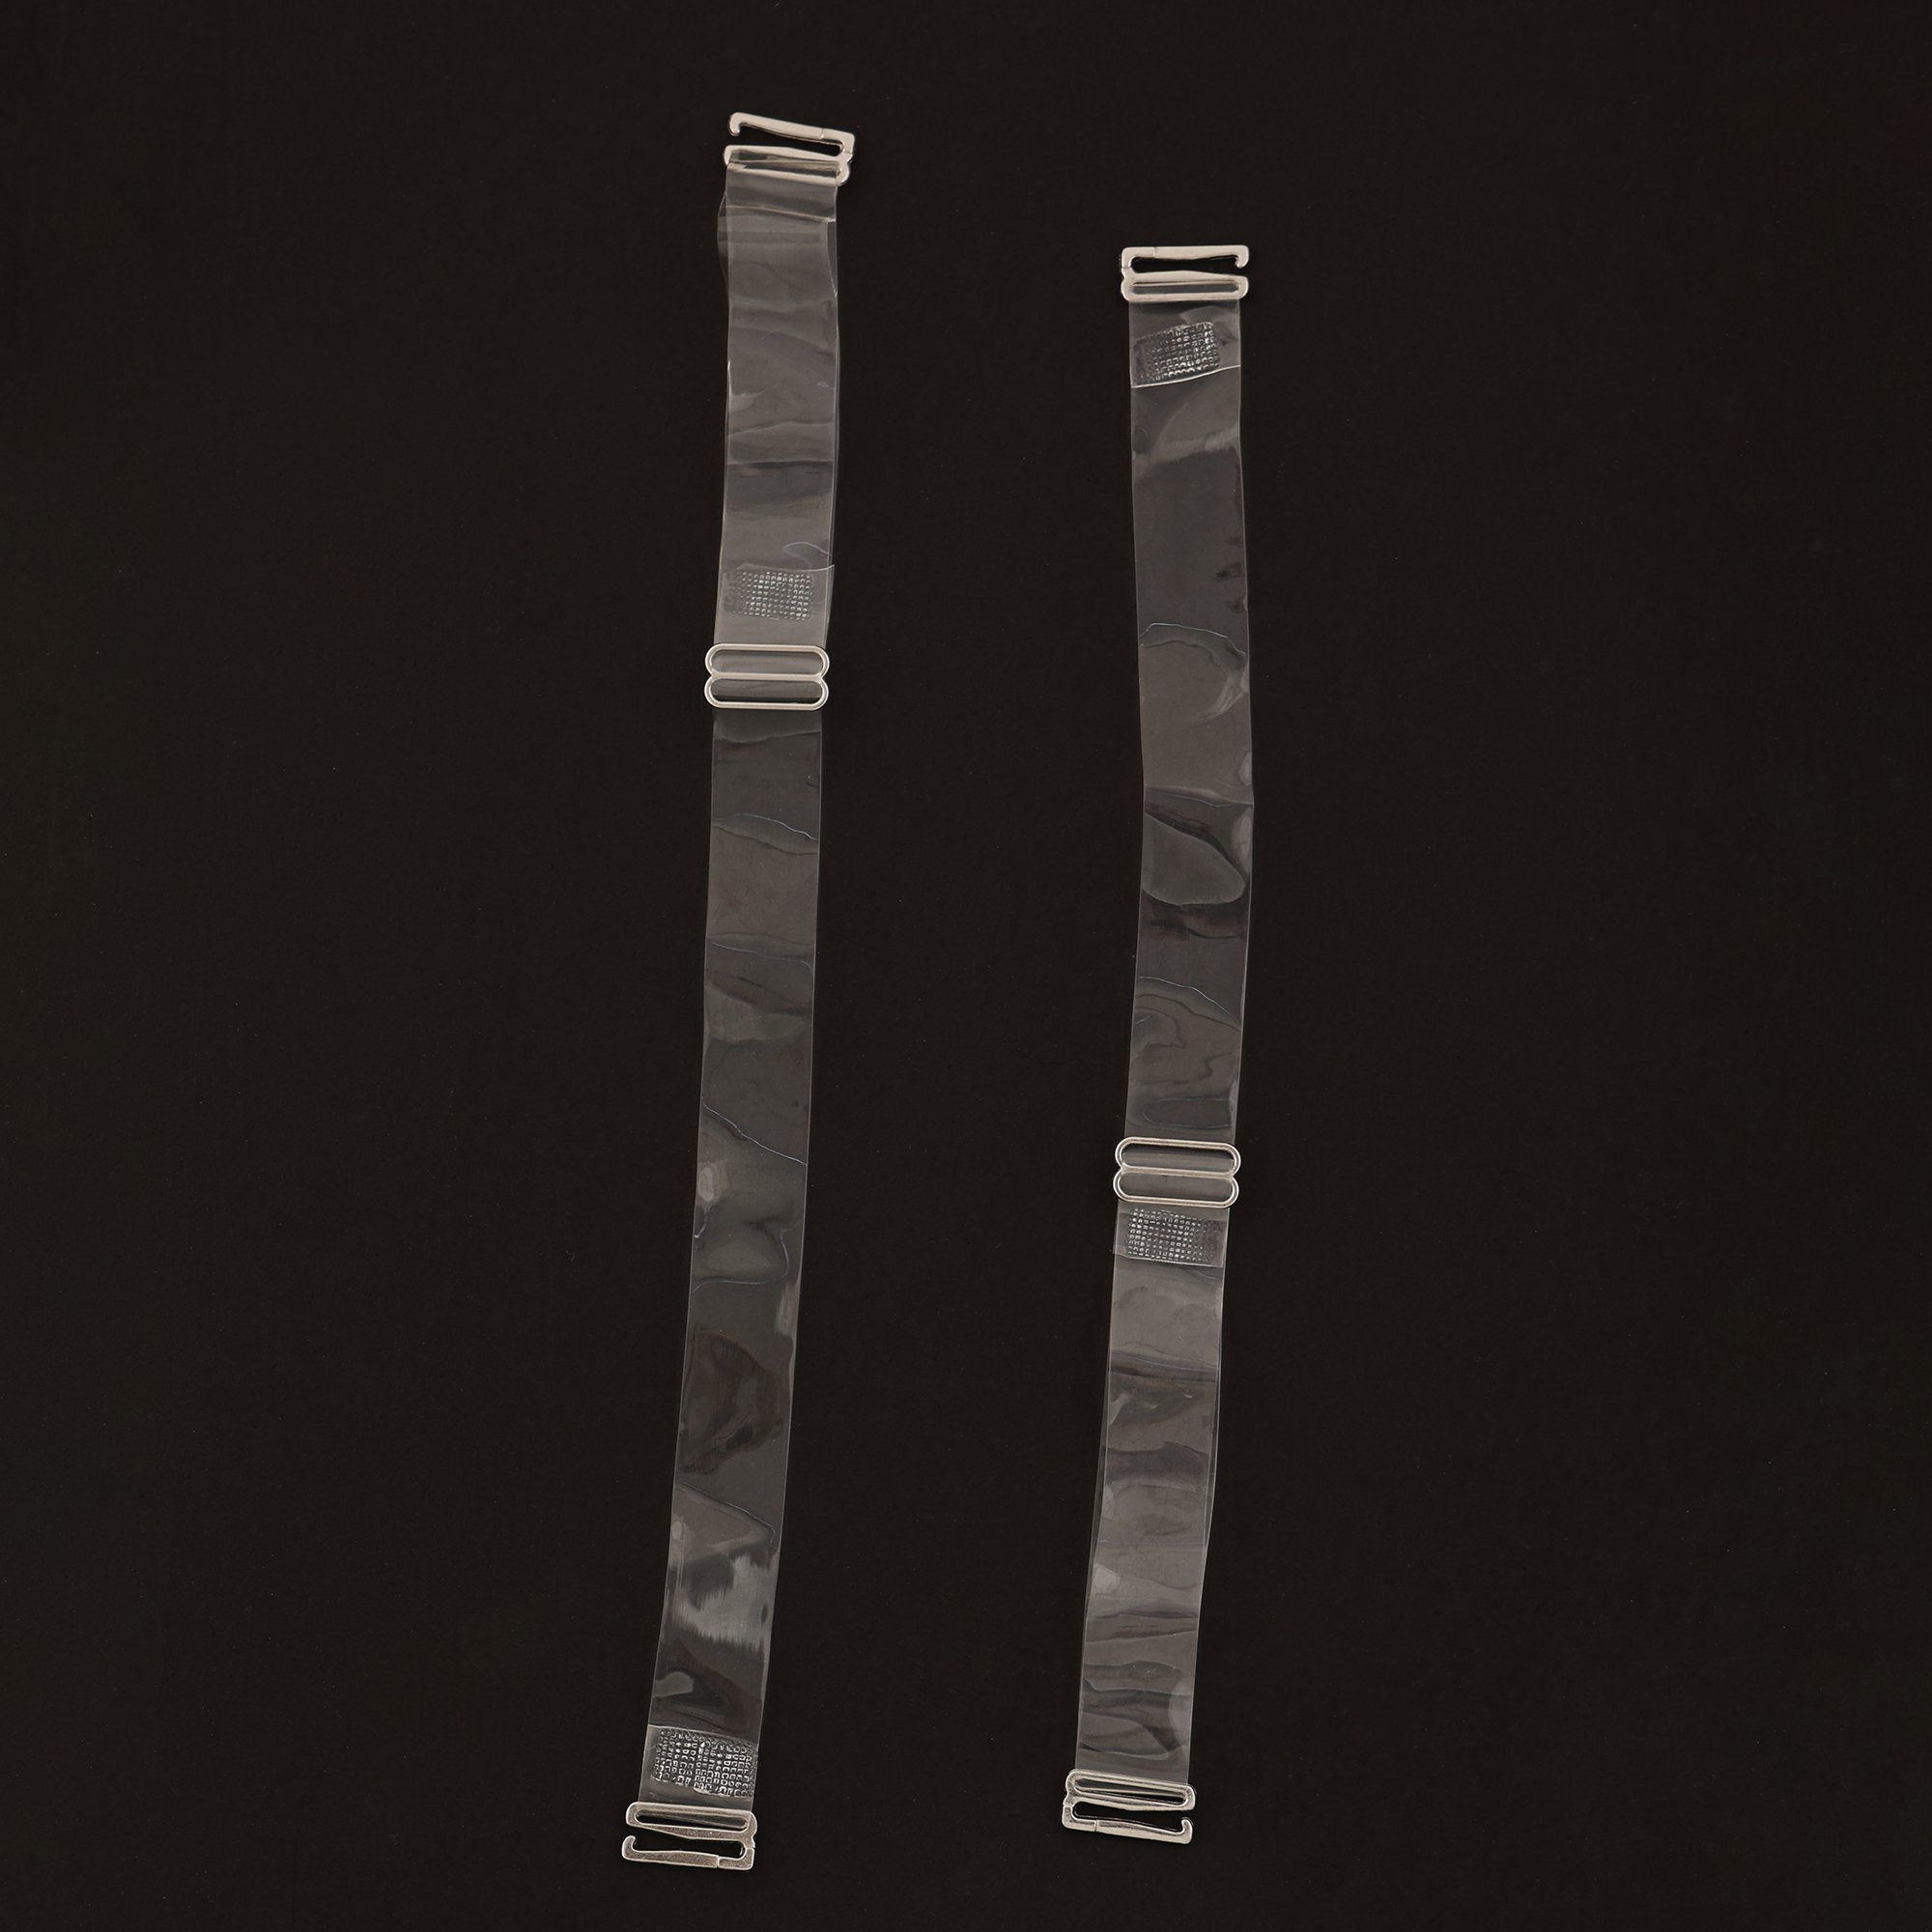 Pack Of 3 Pairs Adjustable Invisible Transparent Shoulder Bra straps